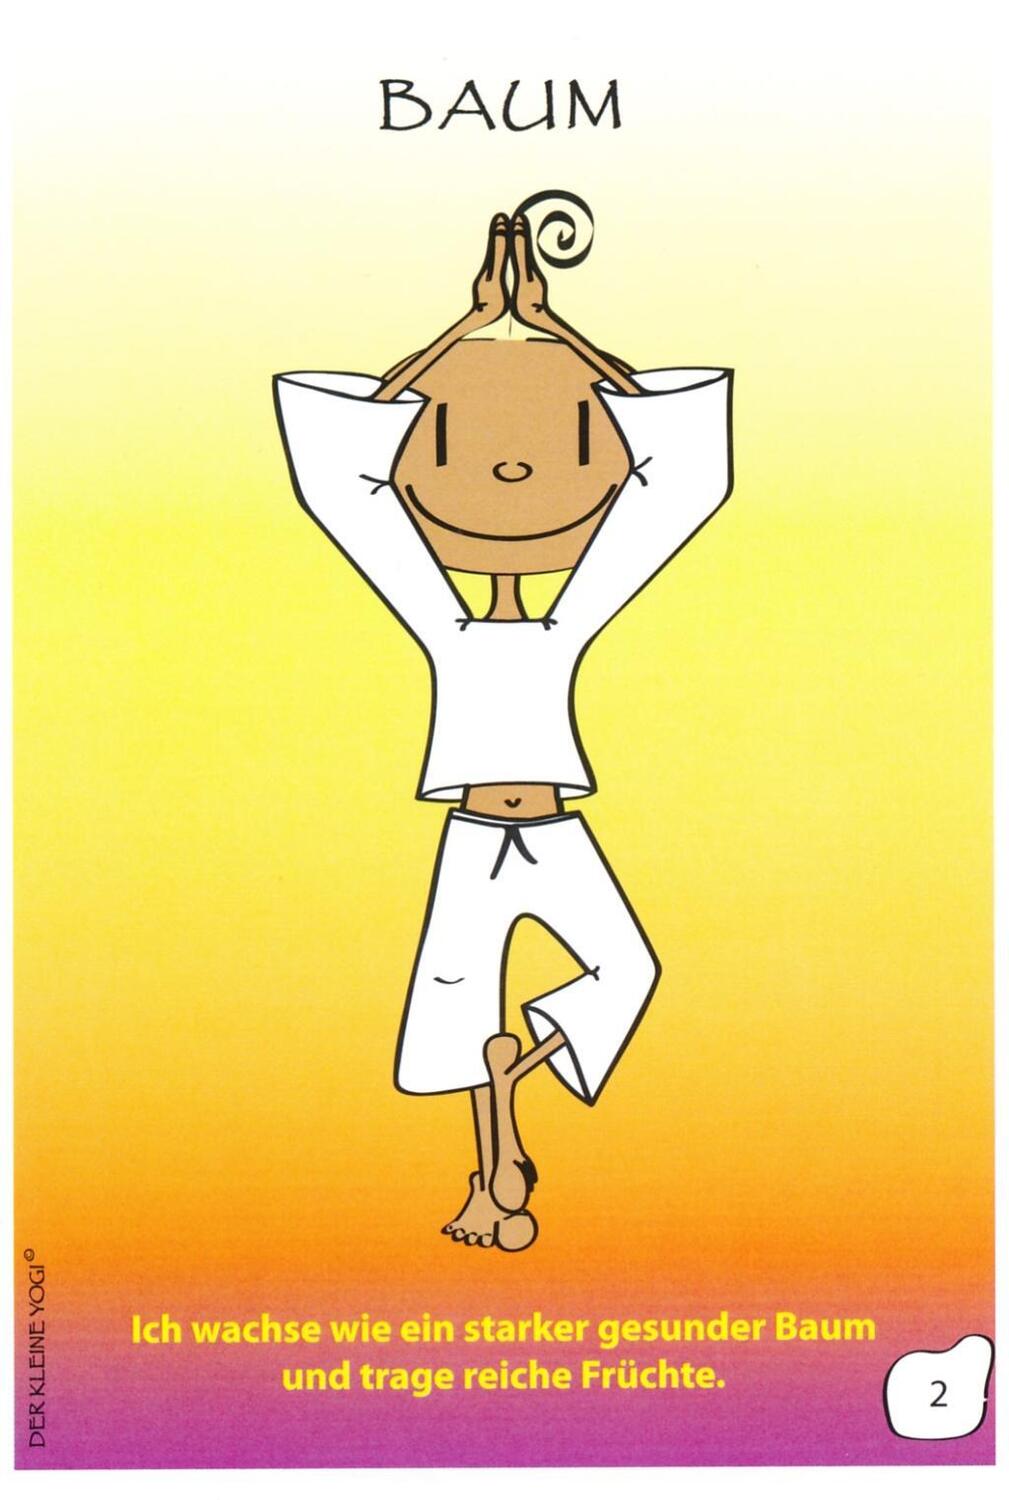 Bild: 4250375102113 | Yoga-Karten | Yoga mit dem kleinen Yogi | Gerti Nausch (u. a.) | 46 S.